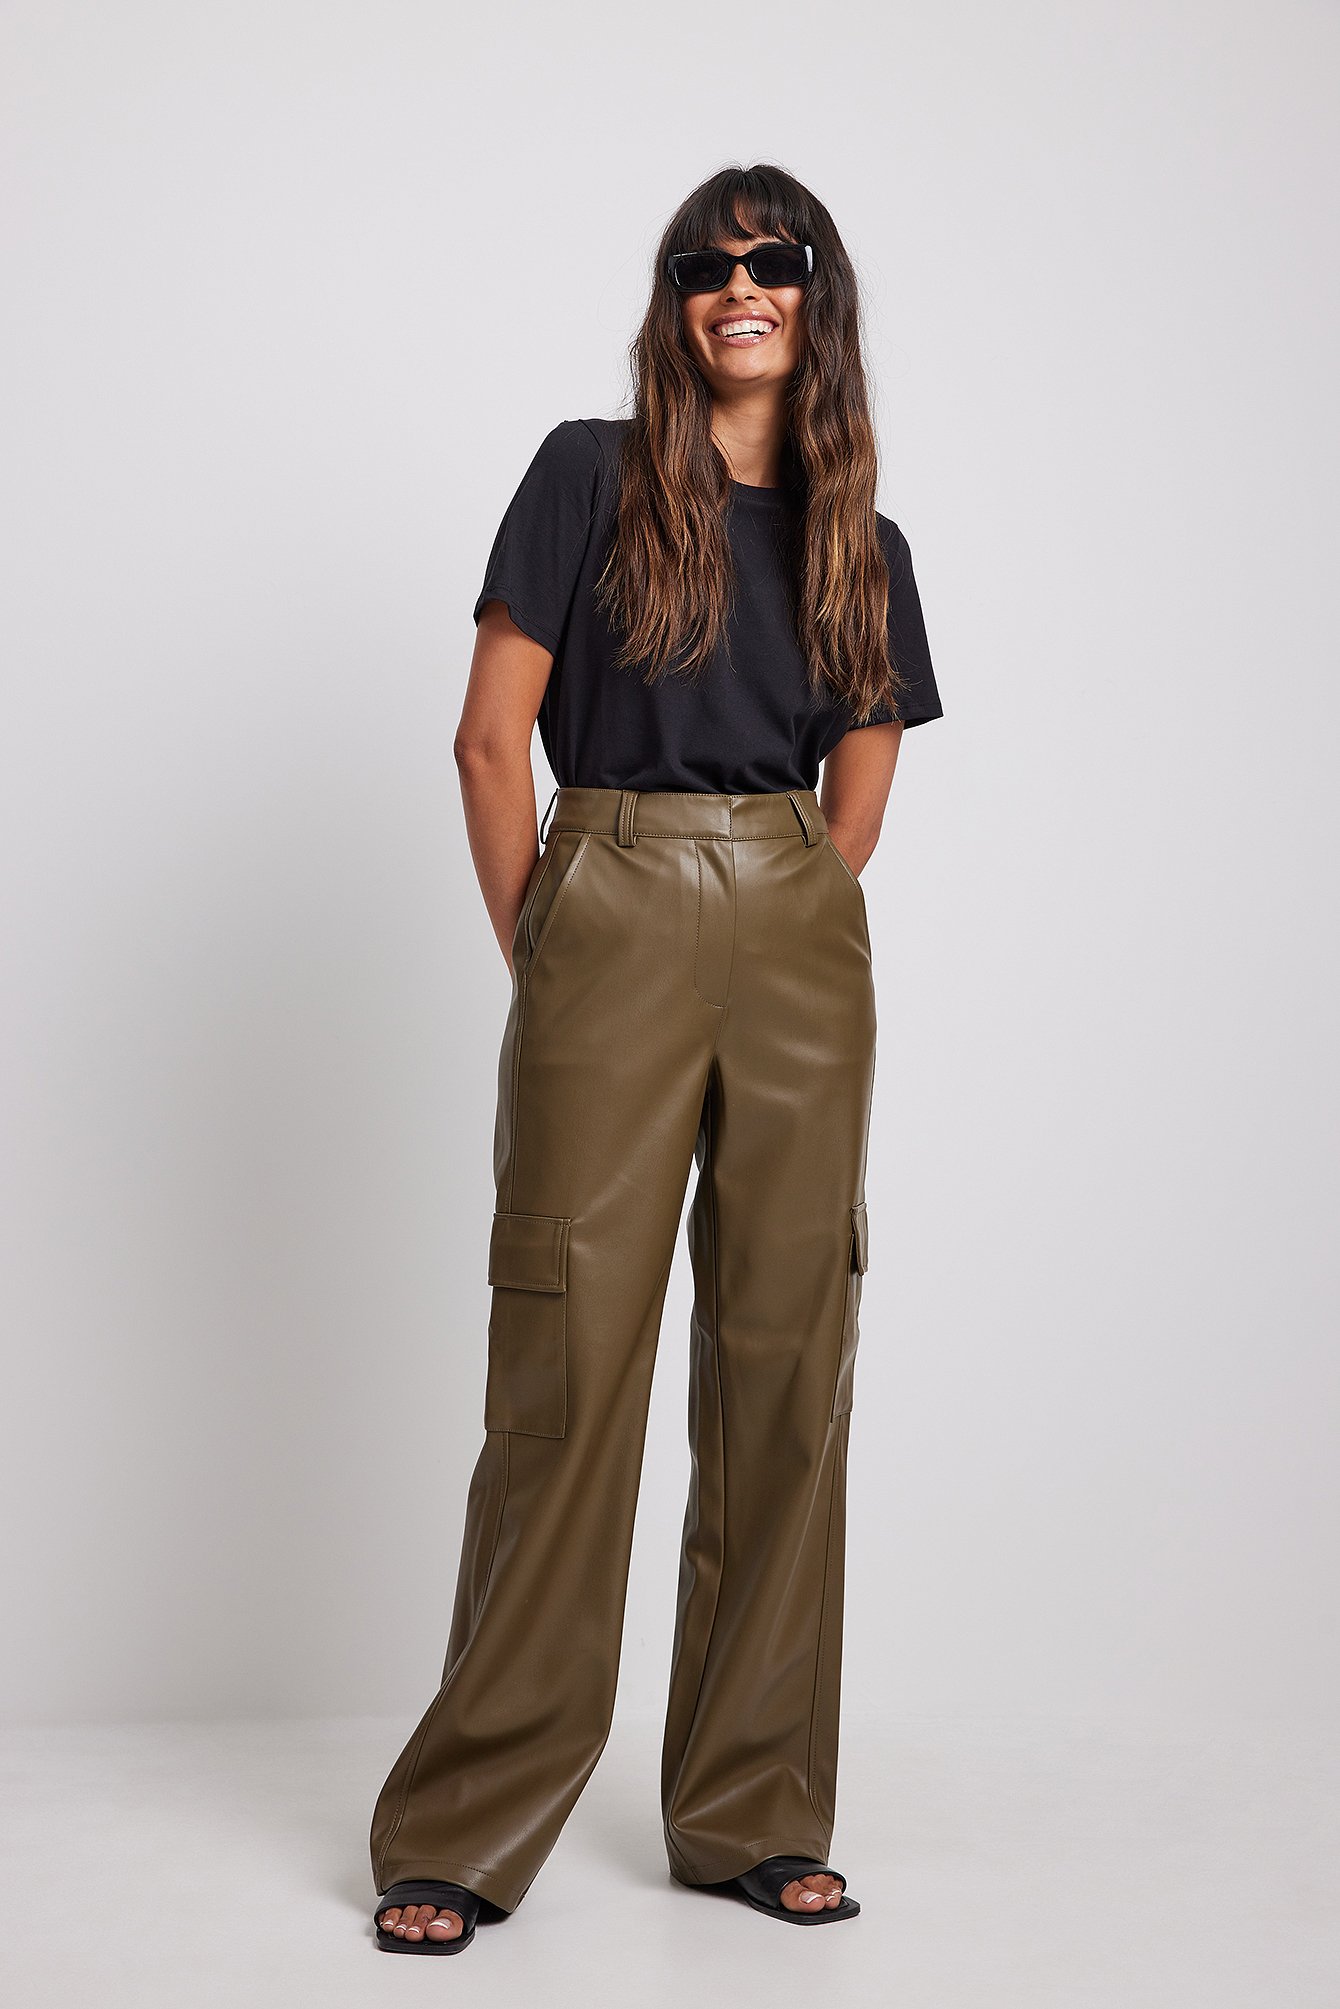 Mathilde Gohler x Nakd Jersey Pants khaki casual look Fashion Trousers Jersey Pants 